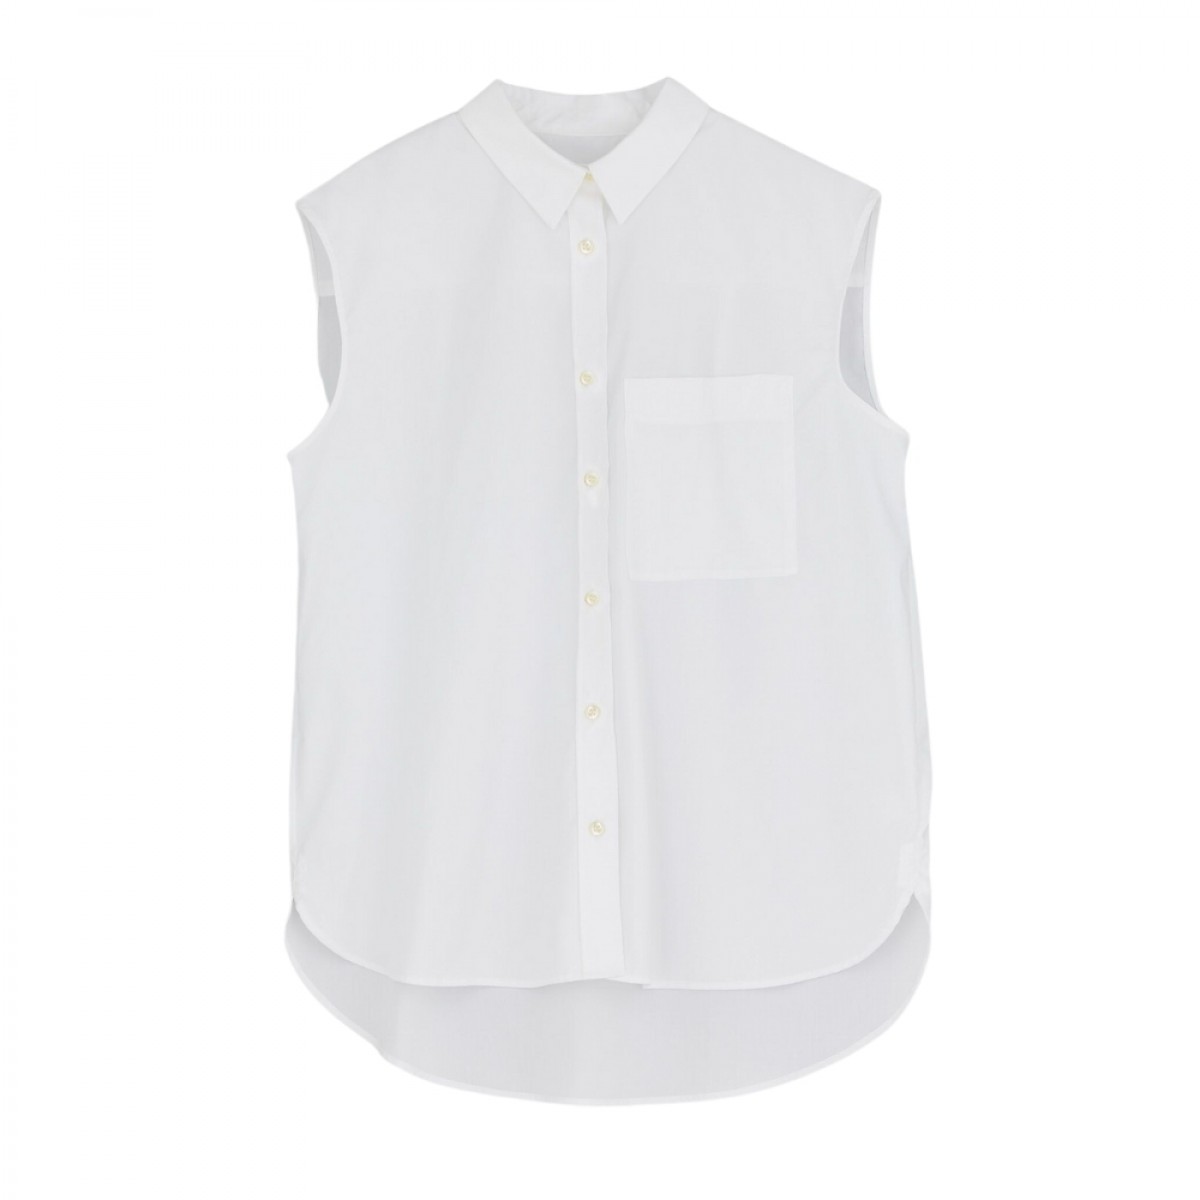 sleeveless tailored - white - front